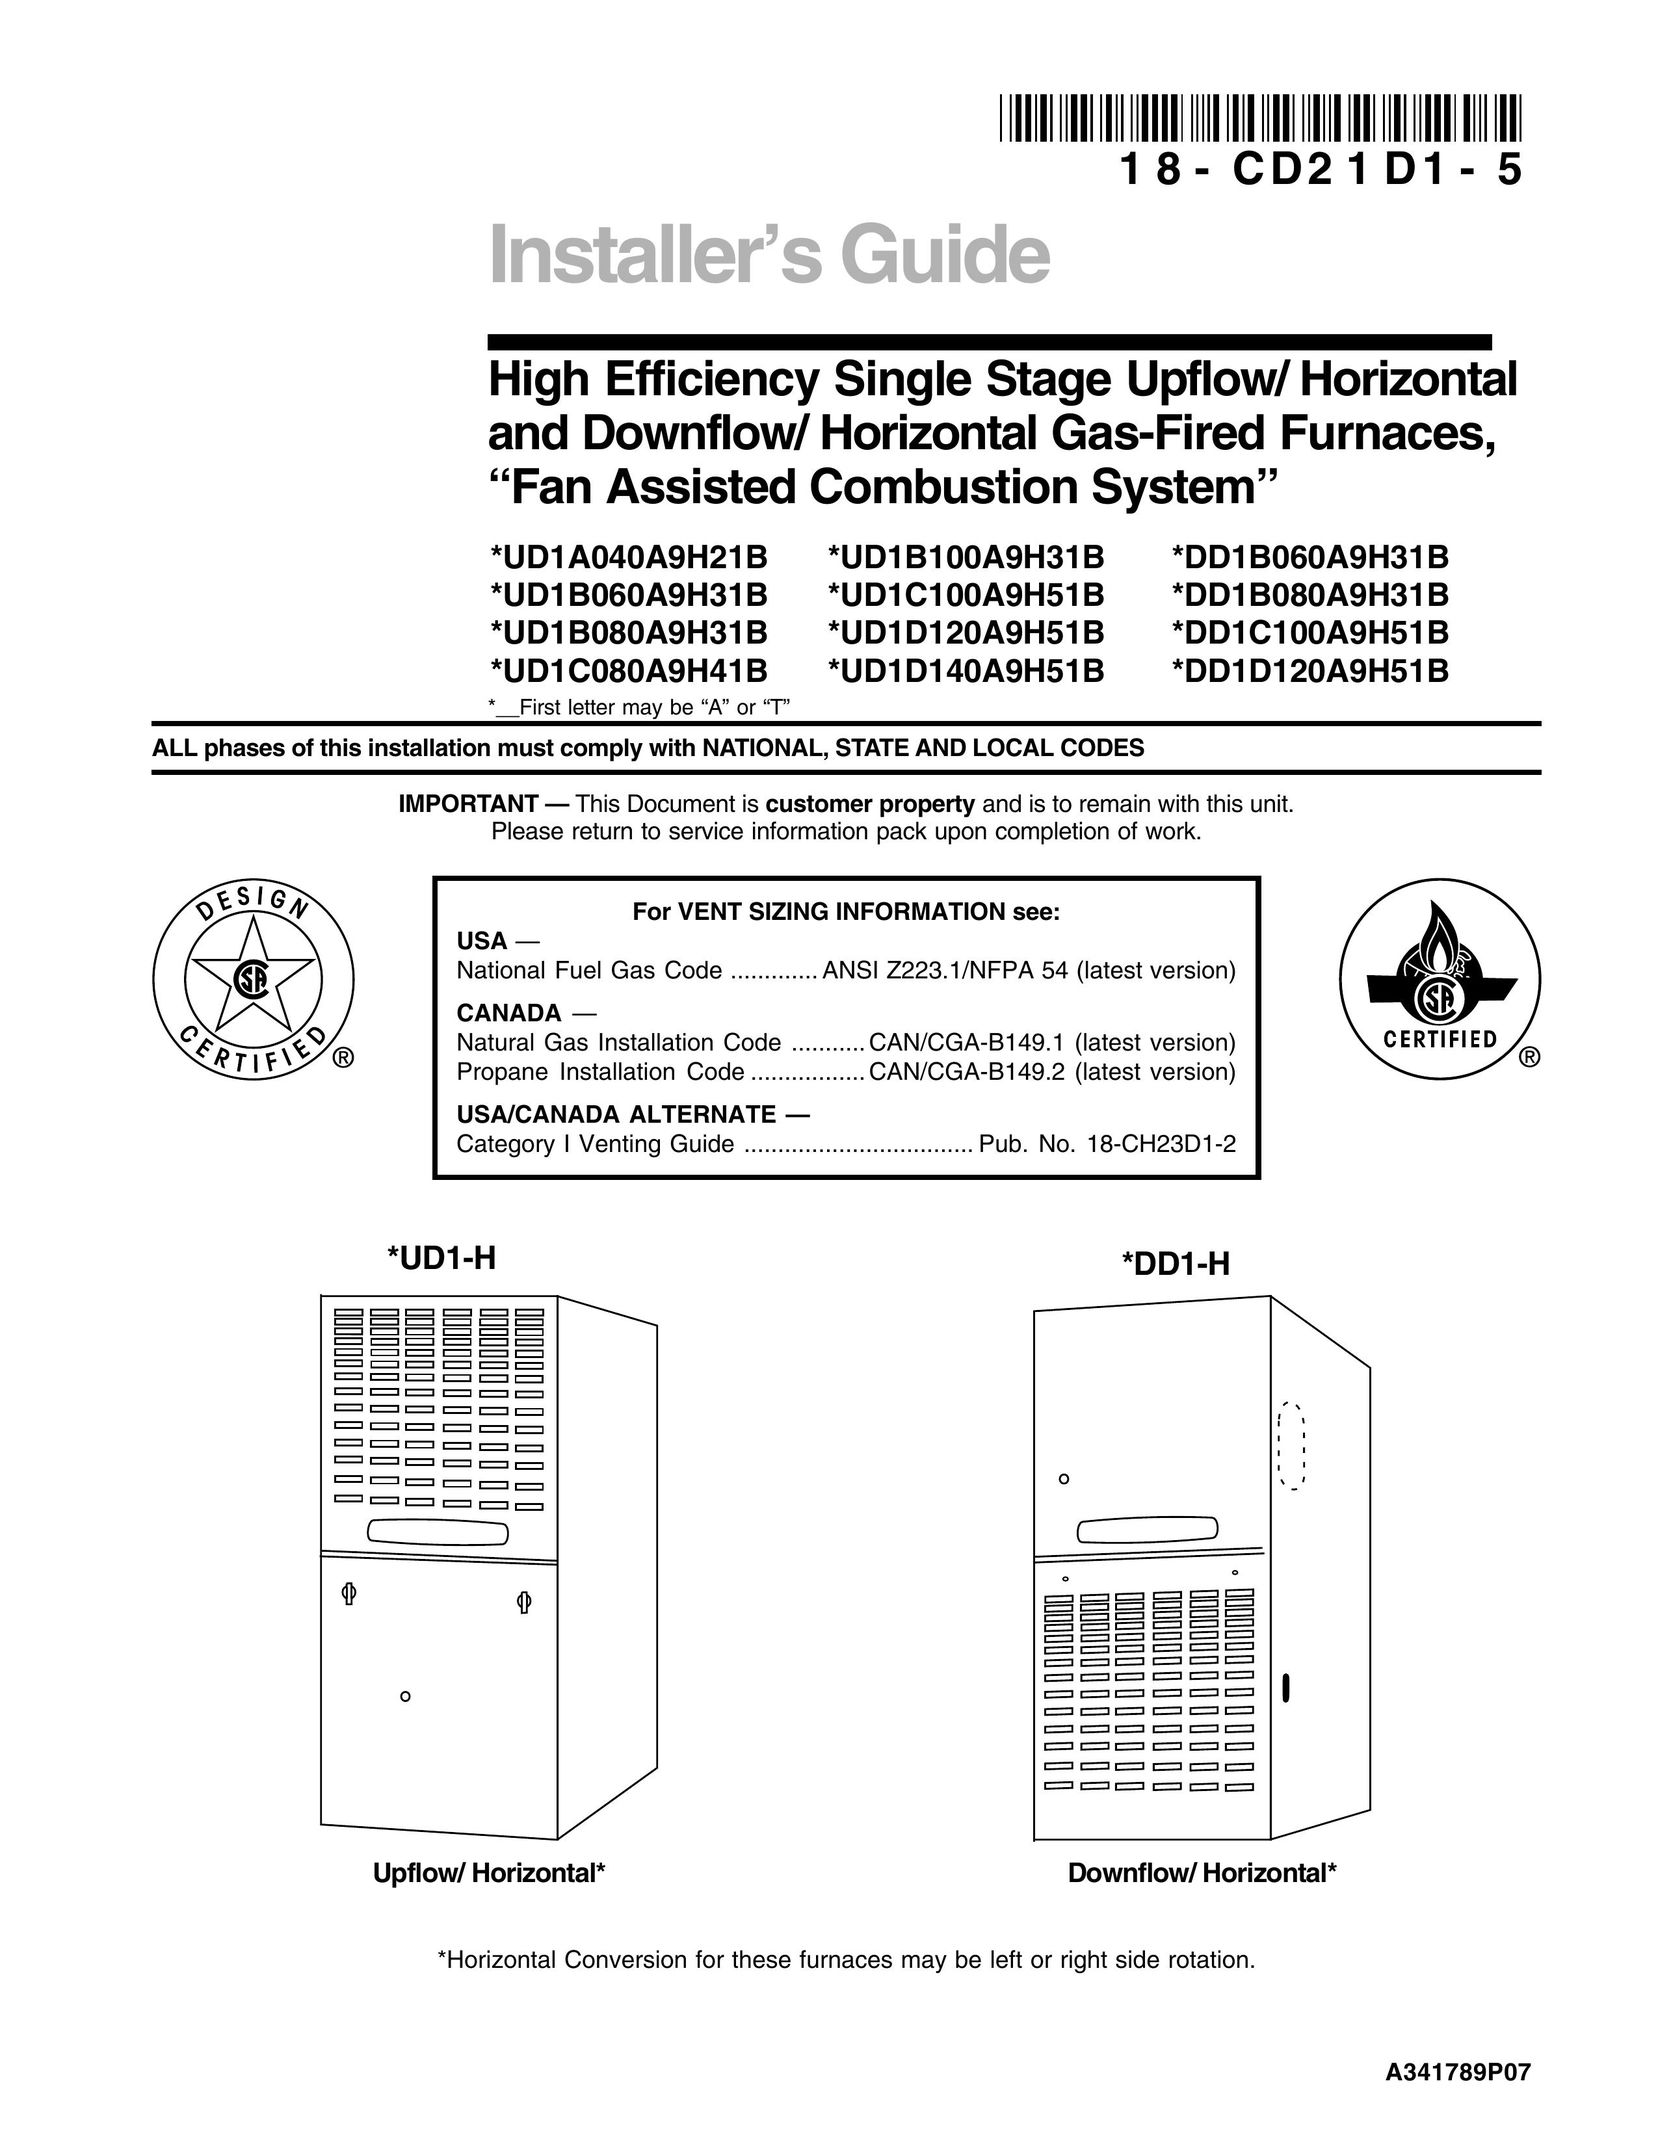 Trane DD1C100A9H51B Furnace User Manual